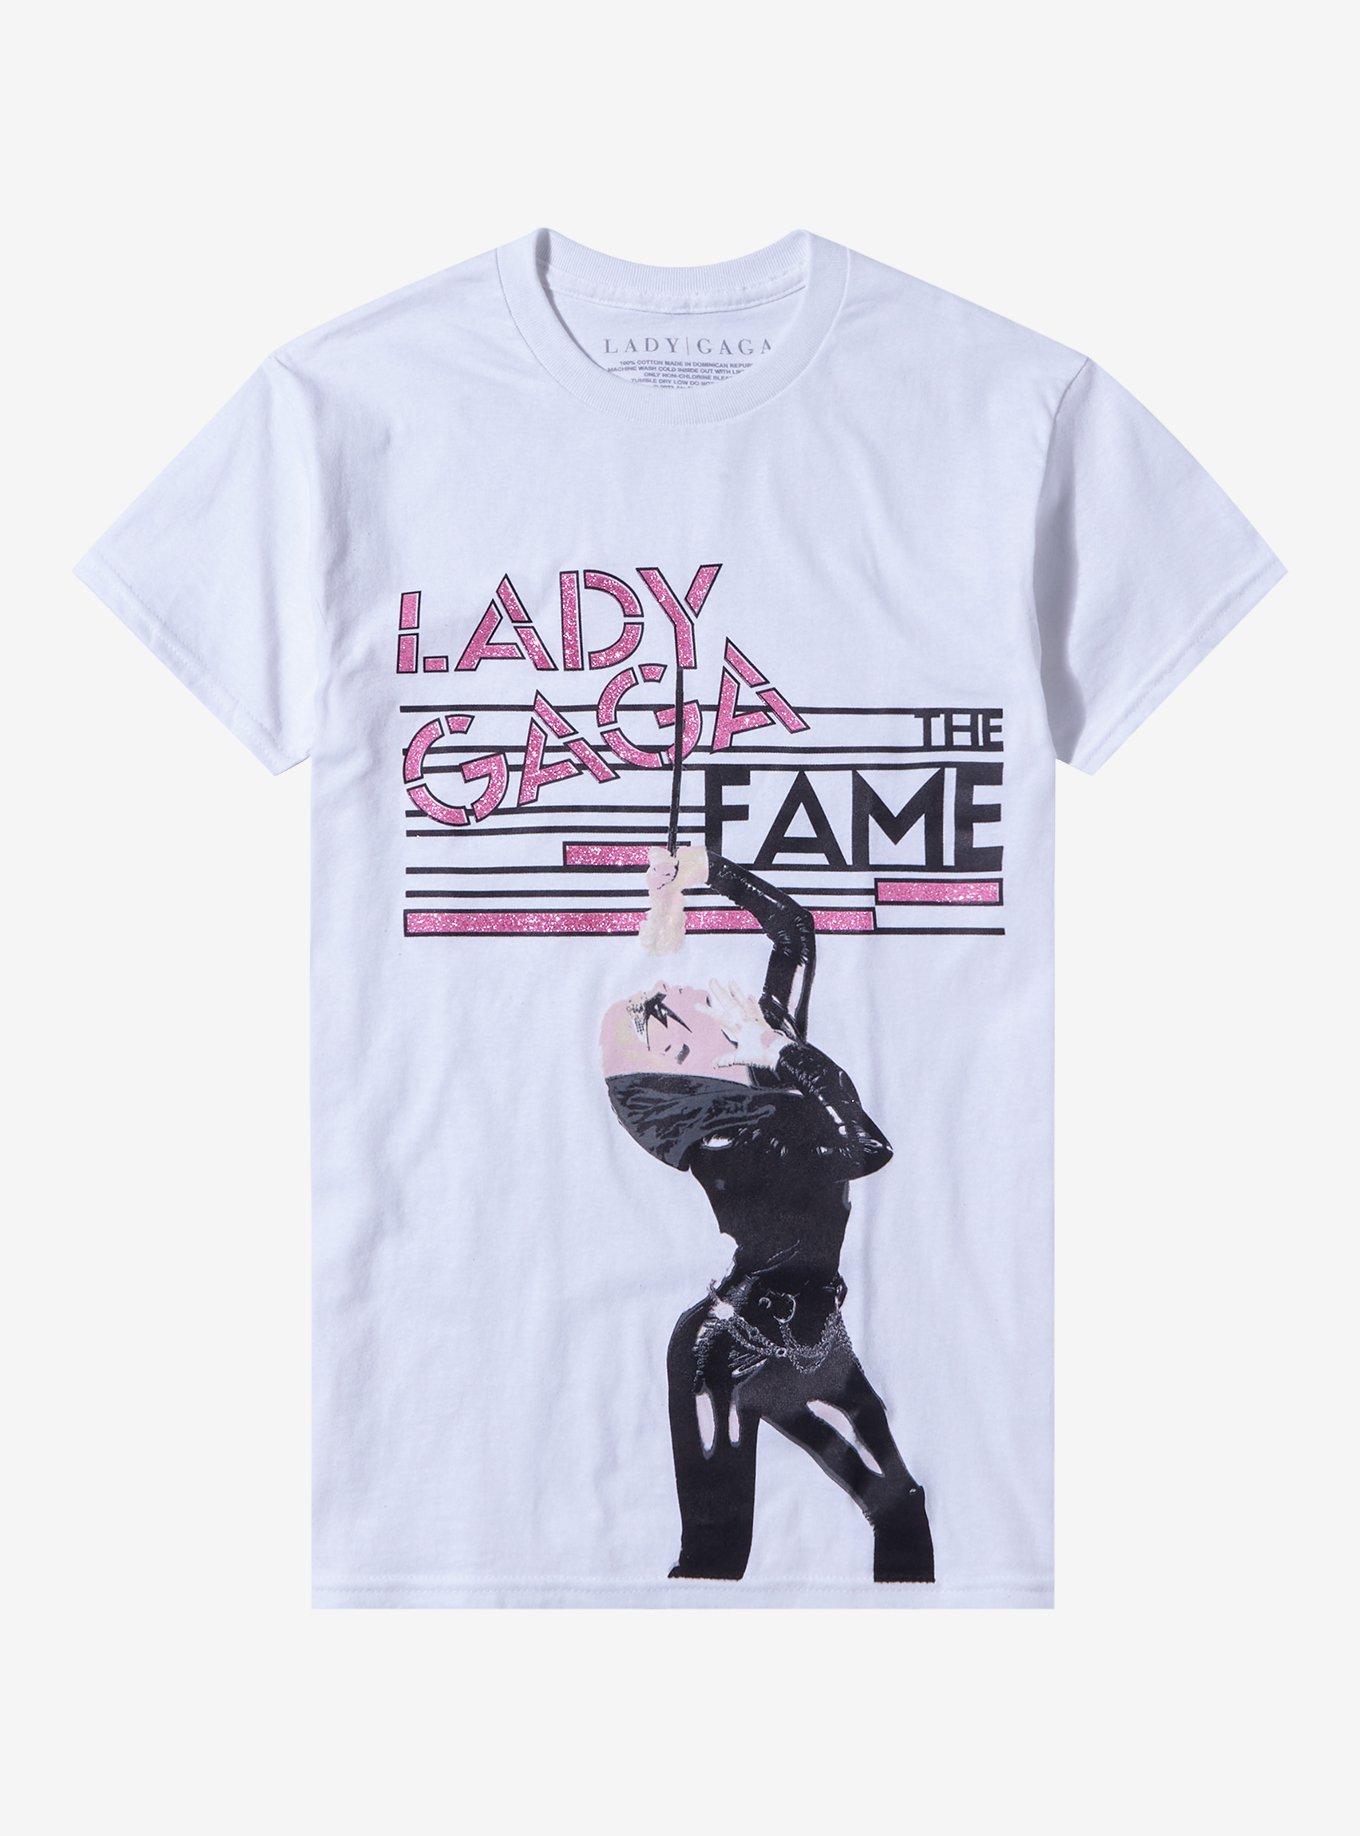 Lady Gaga The Fame Boyfriend Fit Girls T-Shirt